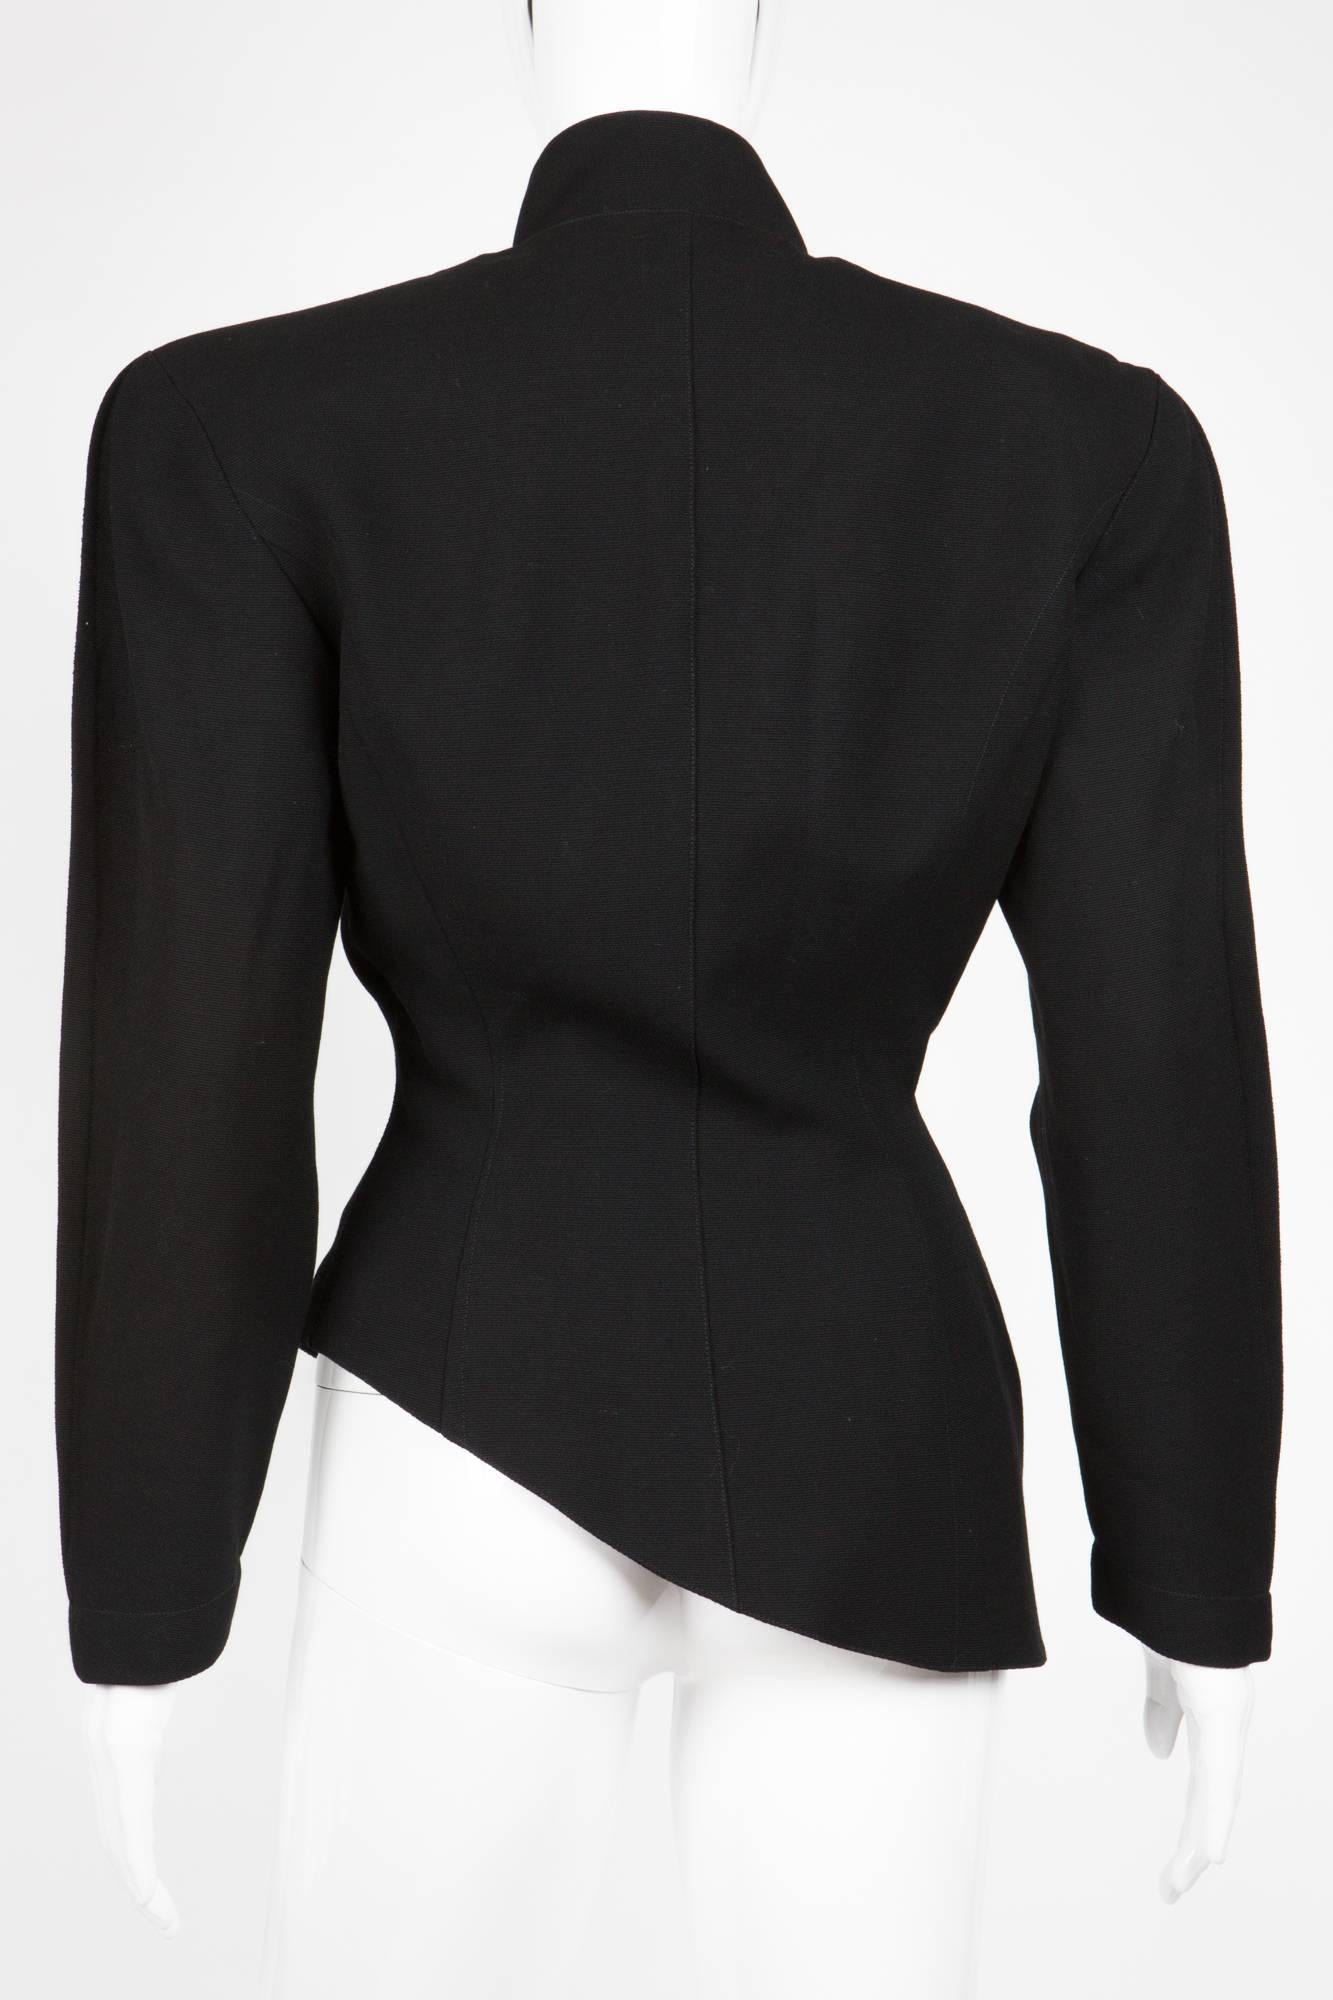 1980s Iconic Thierry Mugler Black Asymmetric Jacket 1